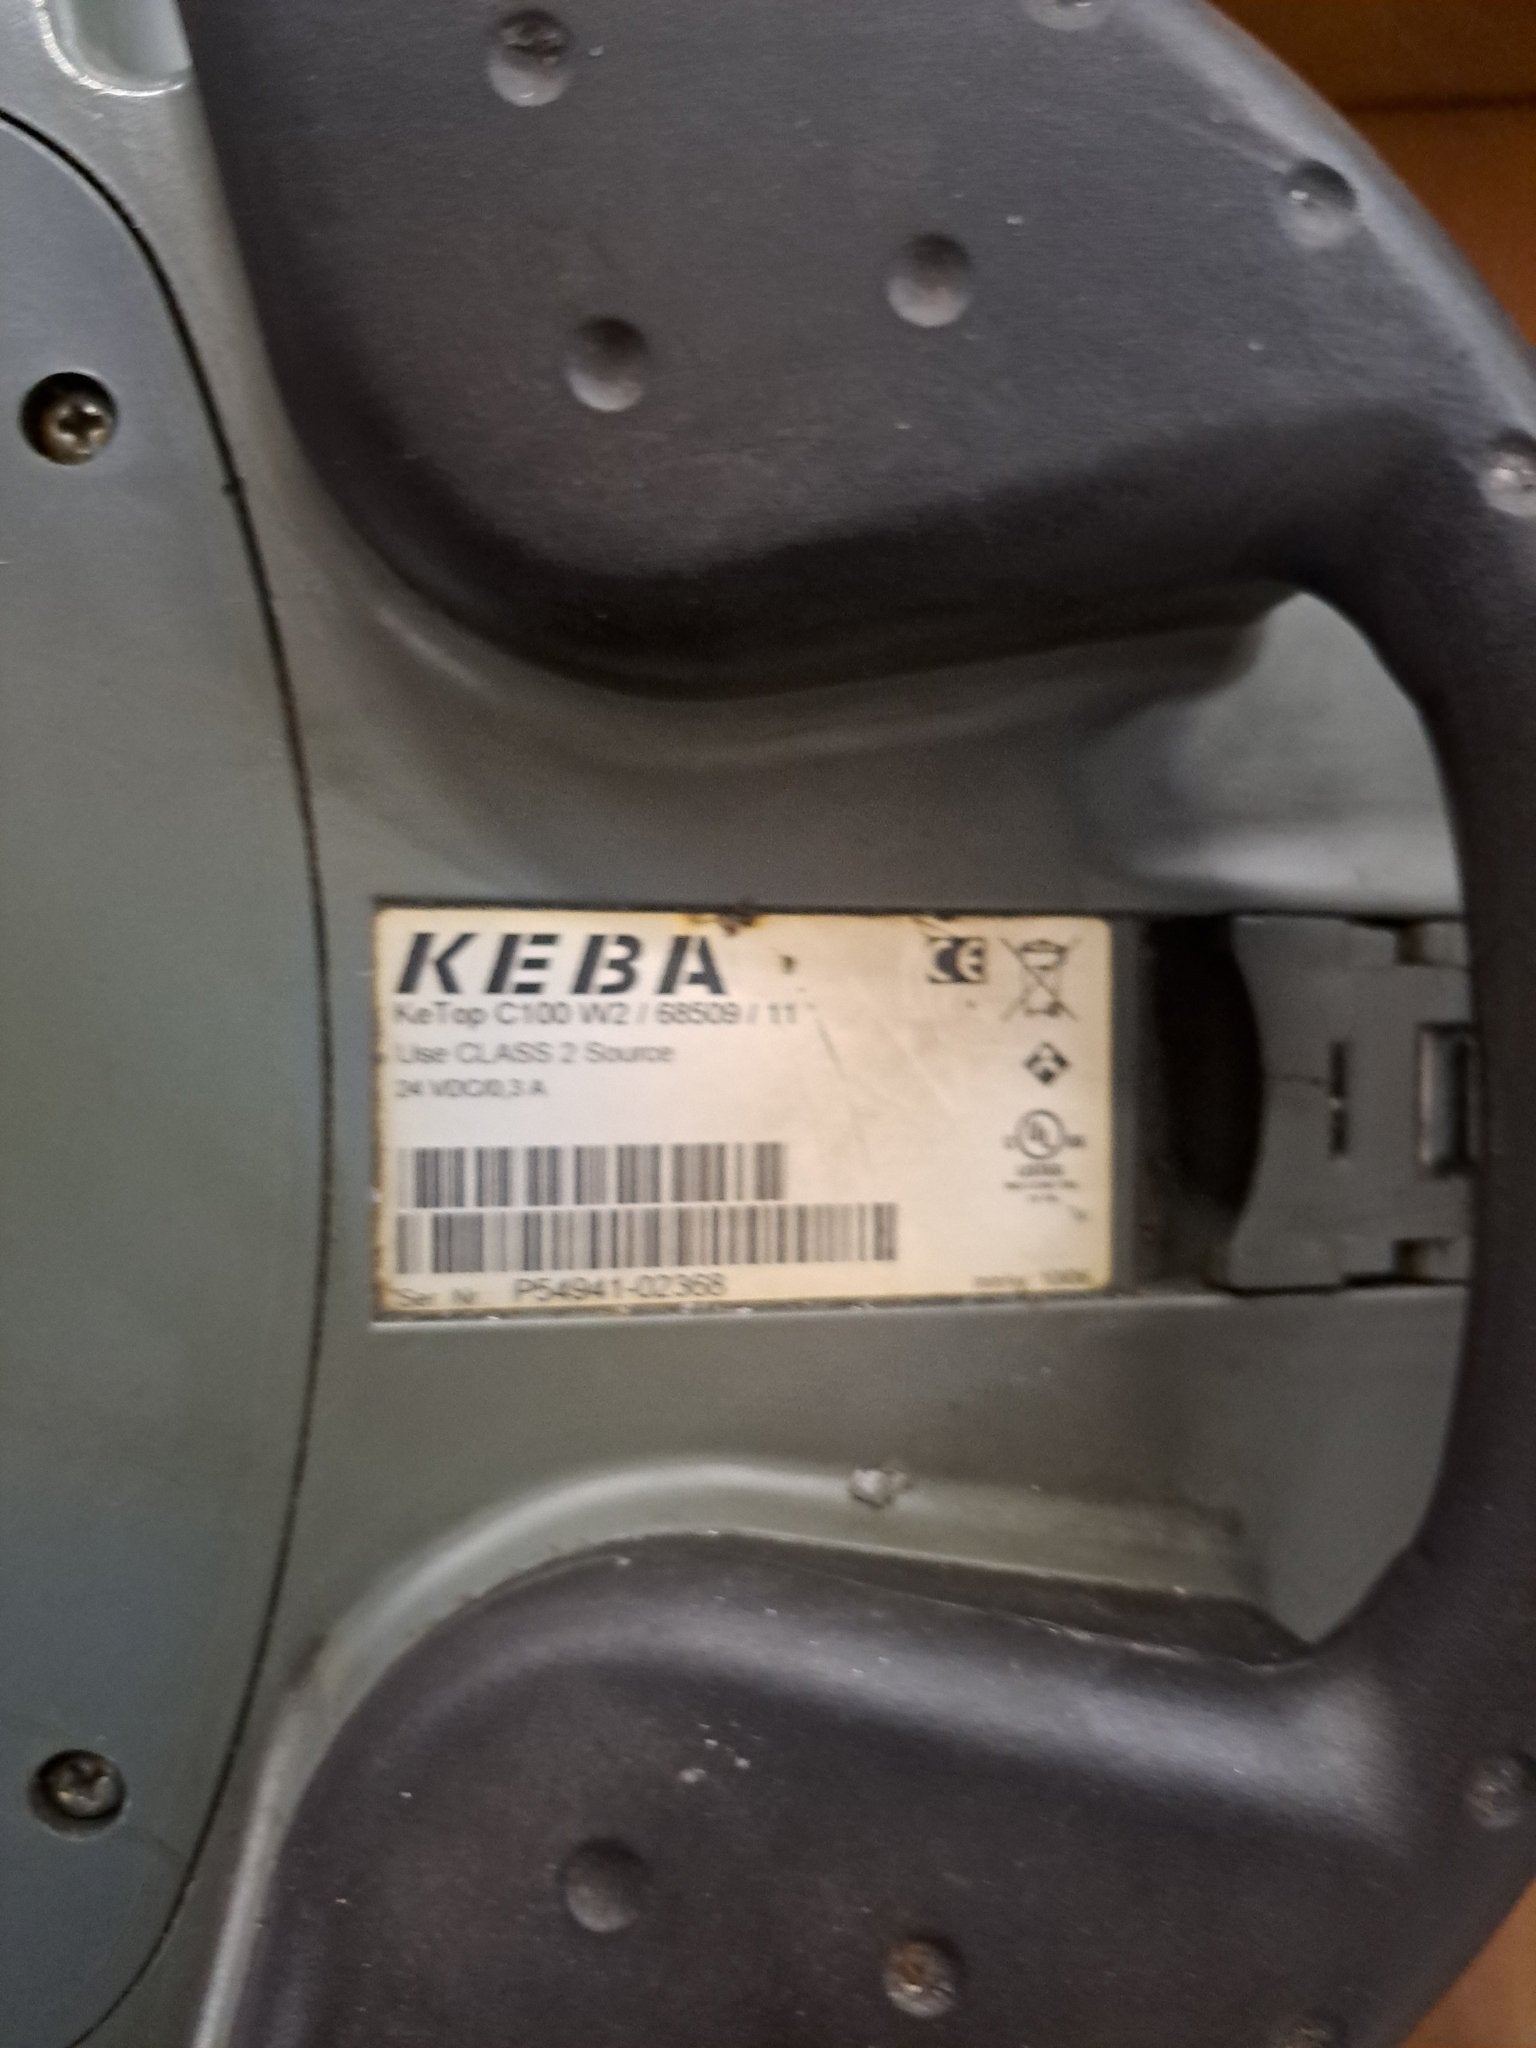 KEBA KeTop C100 W2 / 68509 / 11 - #product_category# | Klenk Maschinenhandel